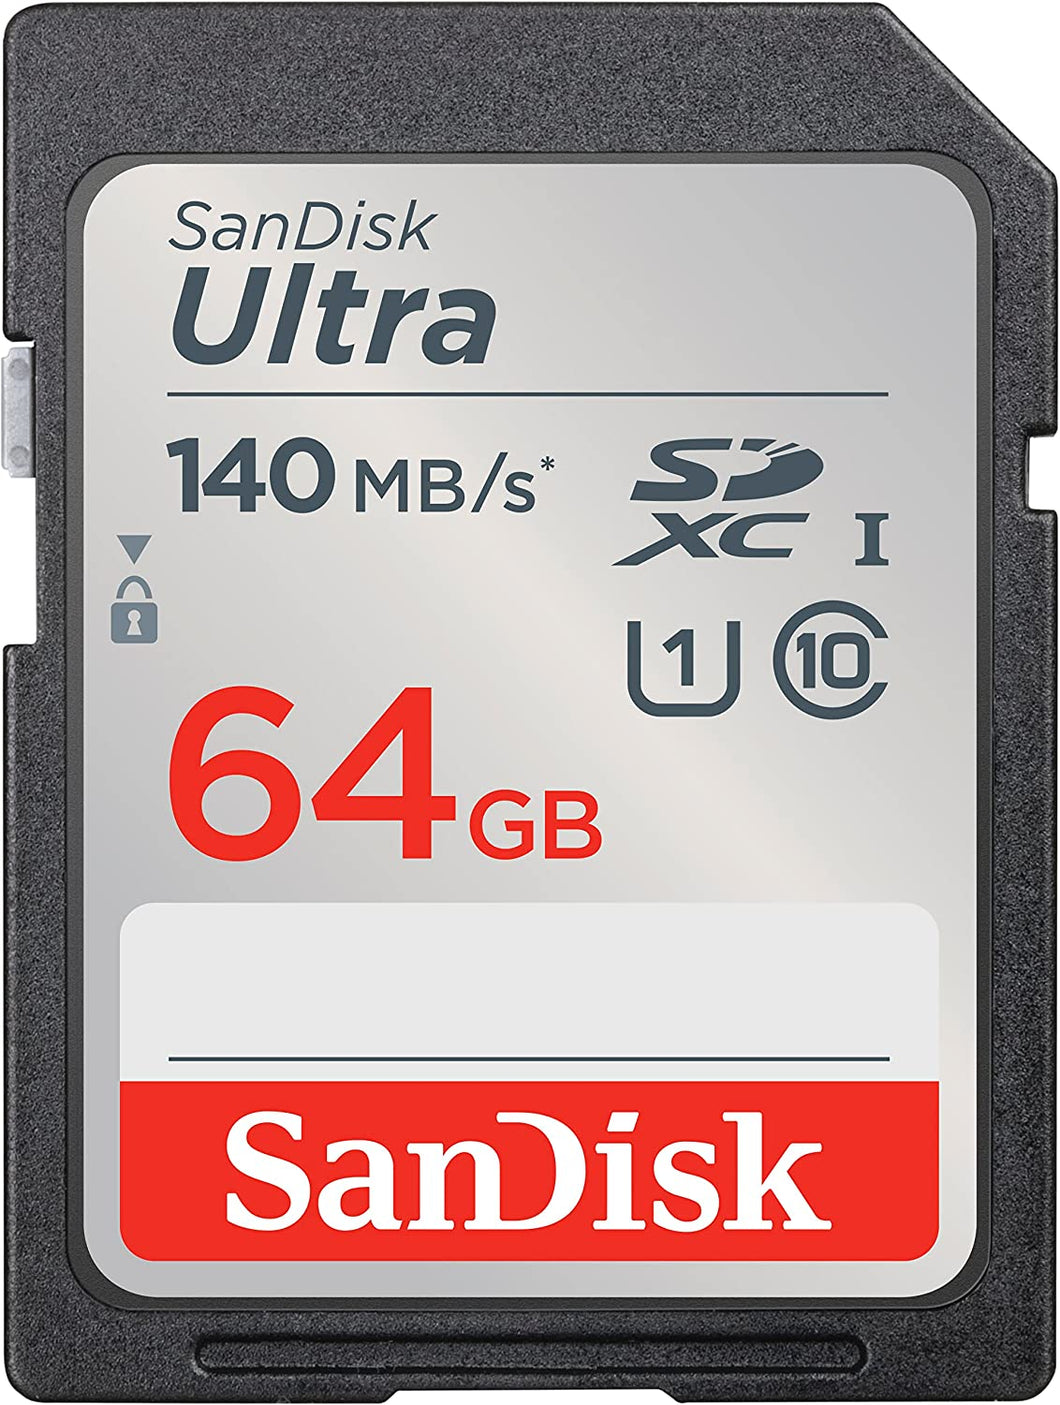 SanDisk SD Ultra 140MB/s (SDSDUNB) Flash Memory Card 64GB 128GB 256GB 512GB